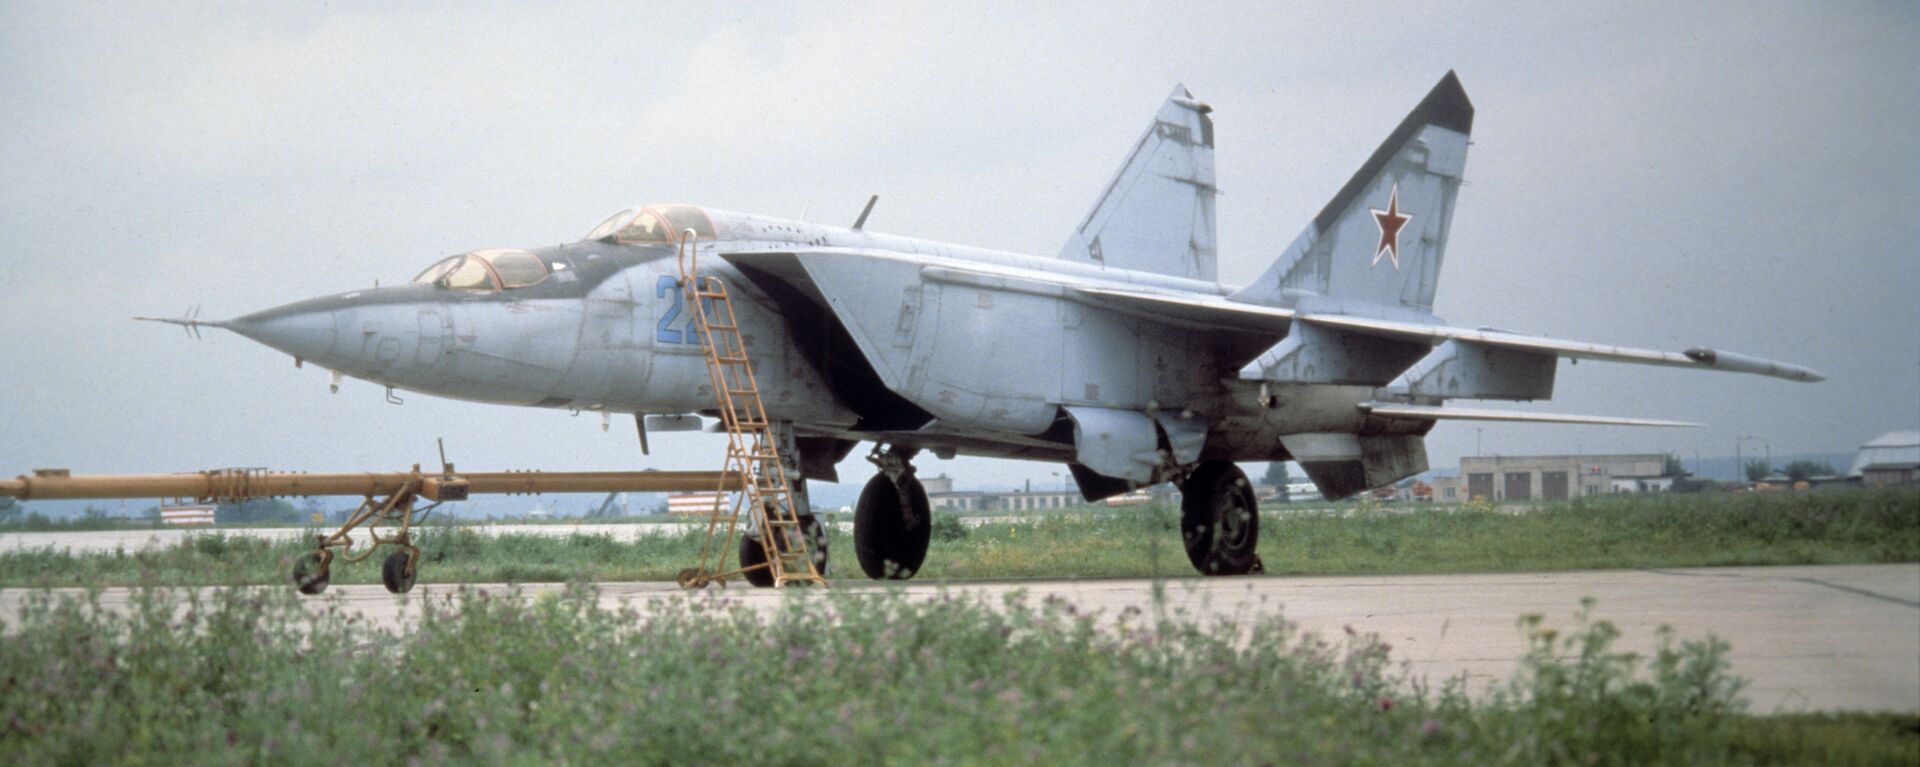 MiG-25, caza soviético (archivo) - Sputnik Mundo, 1920, 28.06.2018